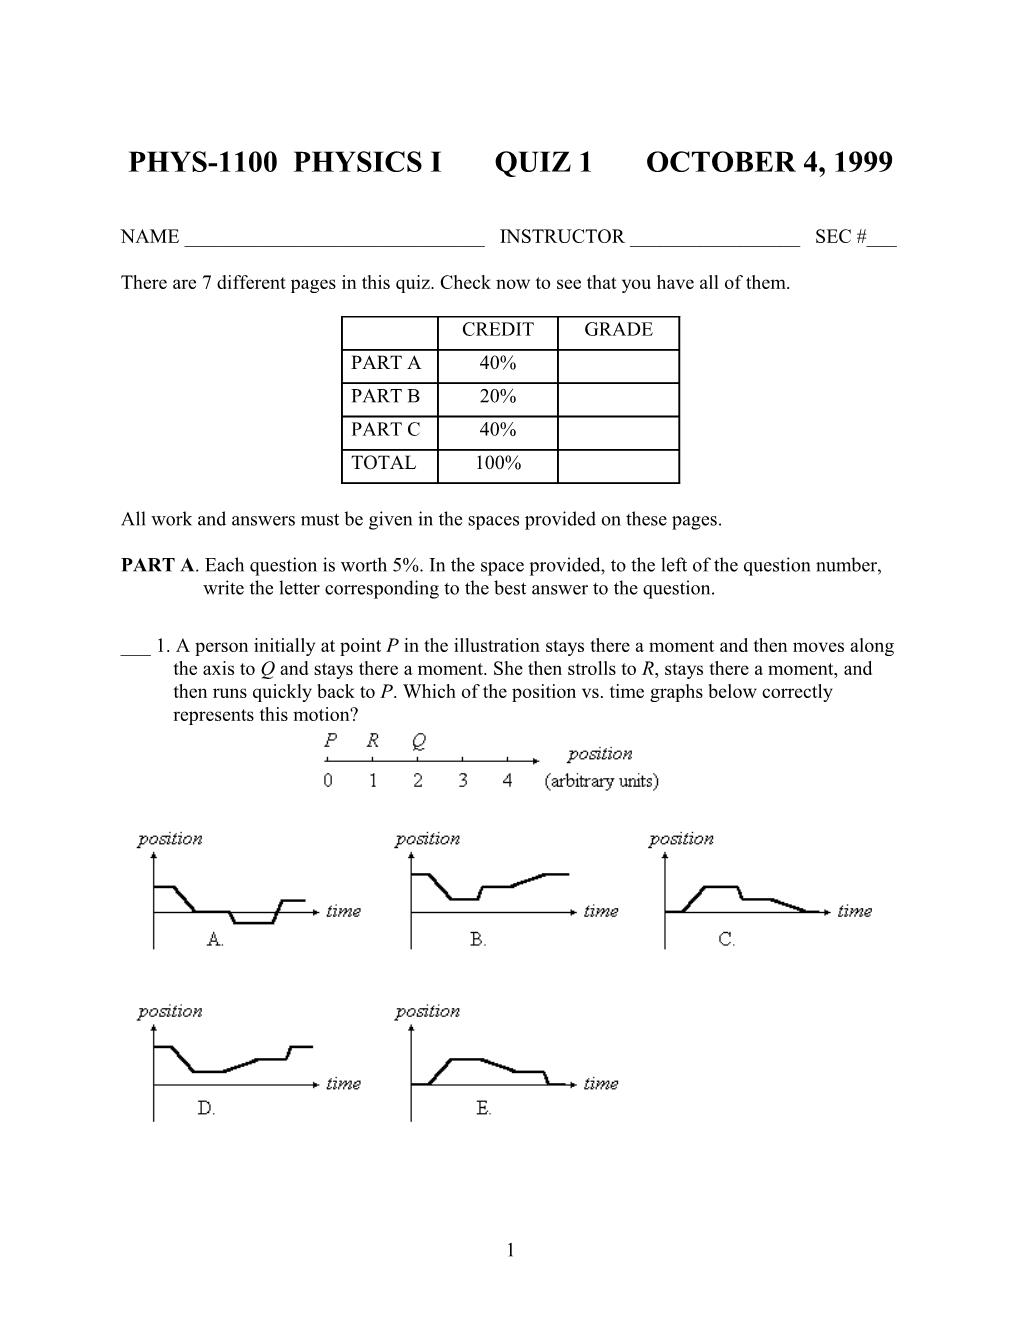 Phys-1100 Physics I Quiz 1 October 4, 1999